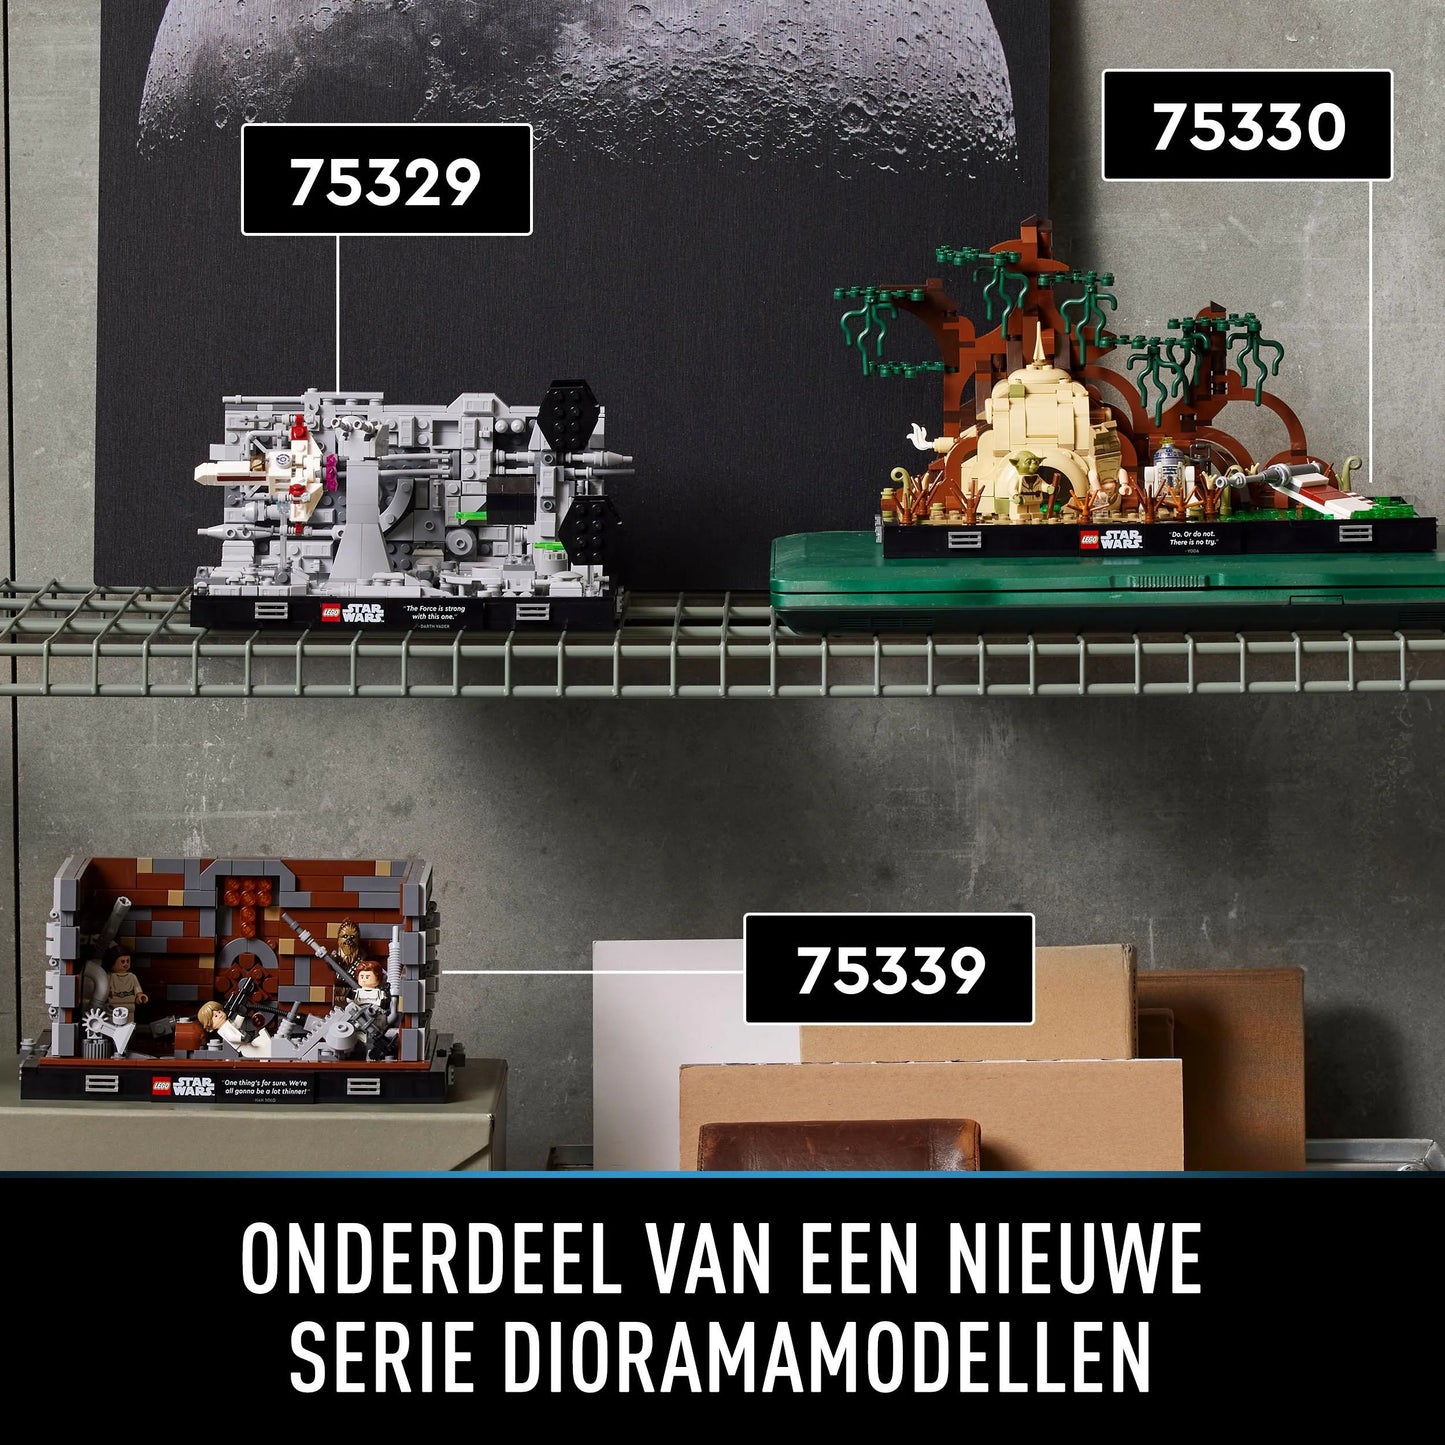 Death Star Trench Run Diorama - LEGO Star Wars